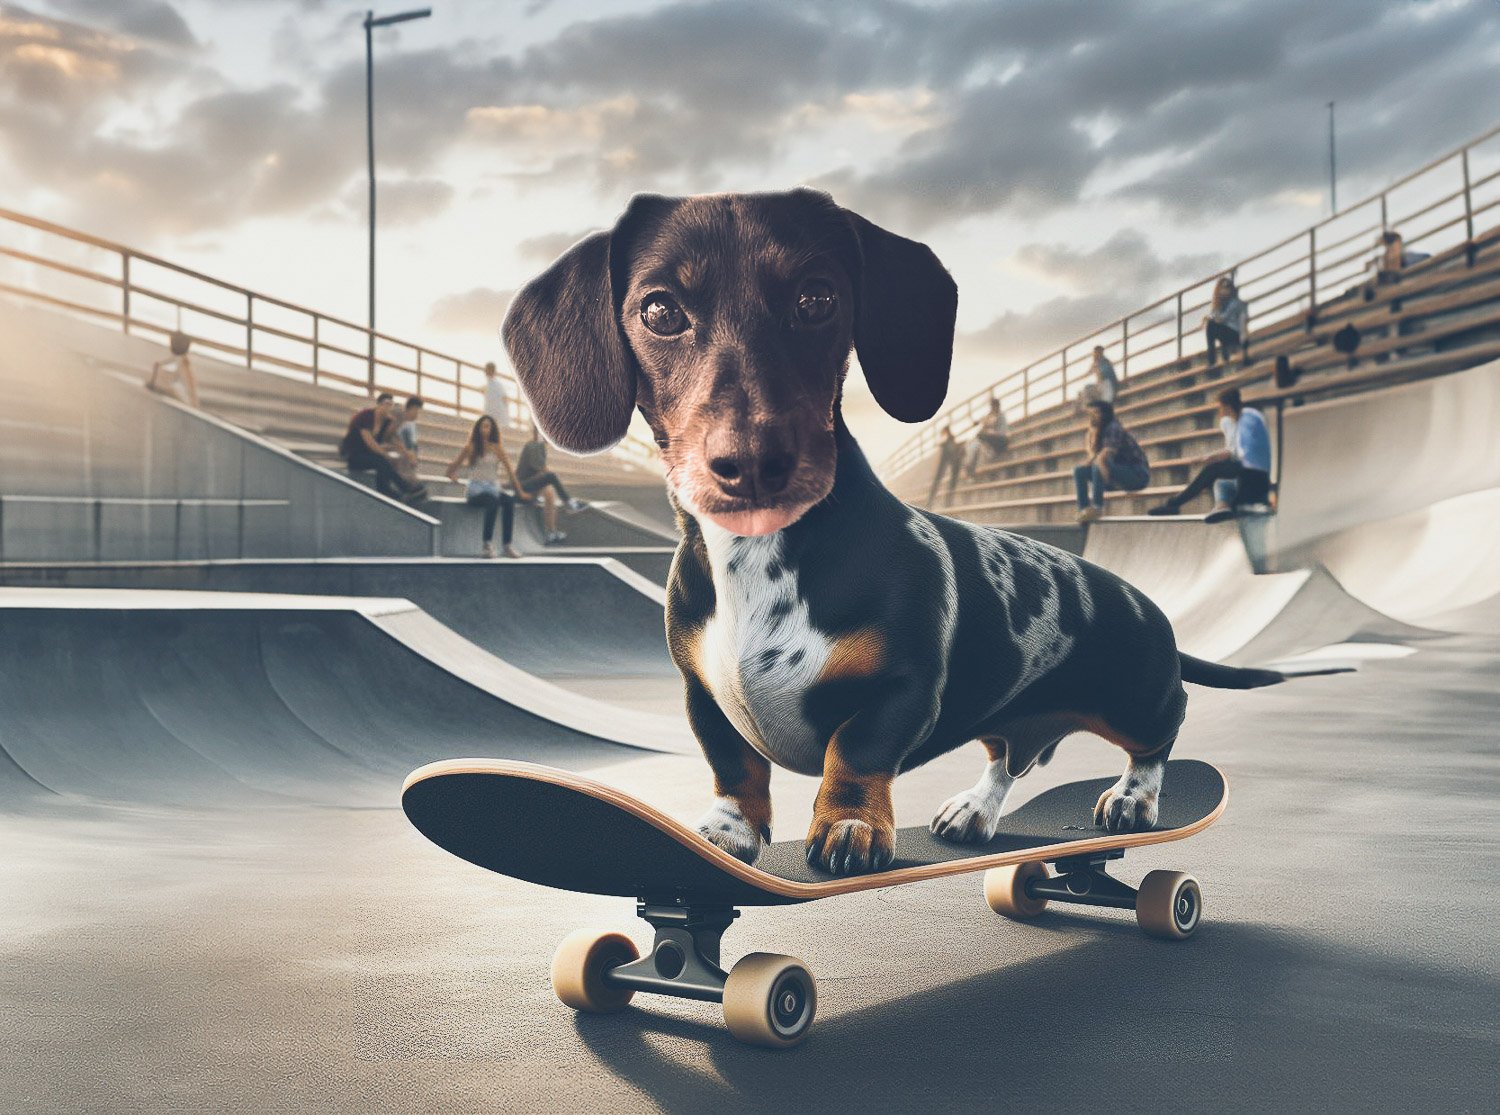 A  dachshund riding a skateboard in a skateboard park